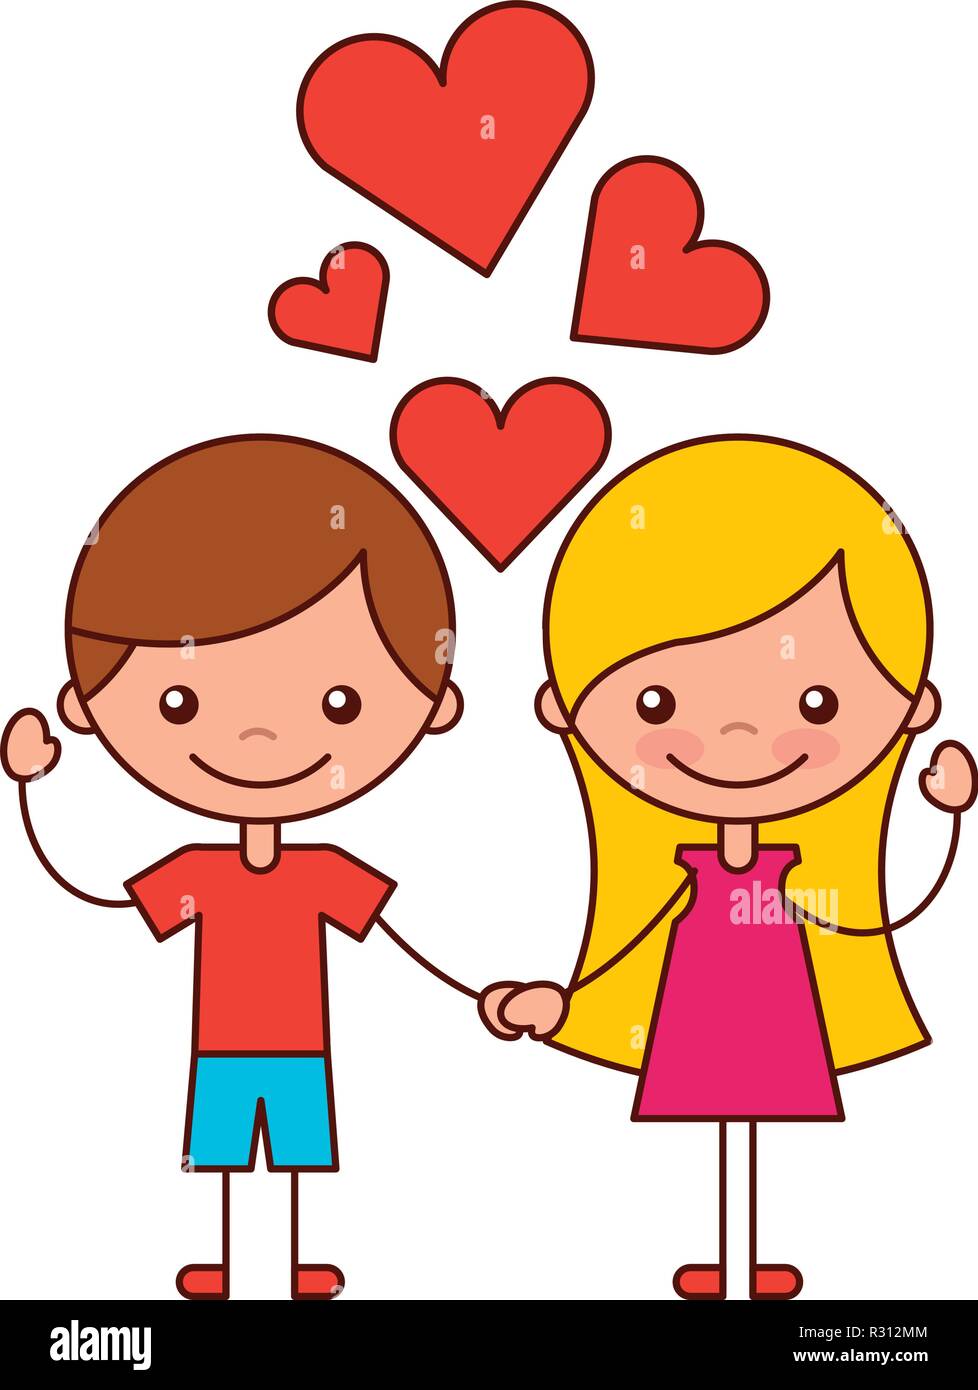 boy and girl love hearts cartoon vector illustration Stock Vector